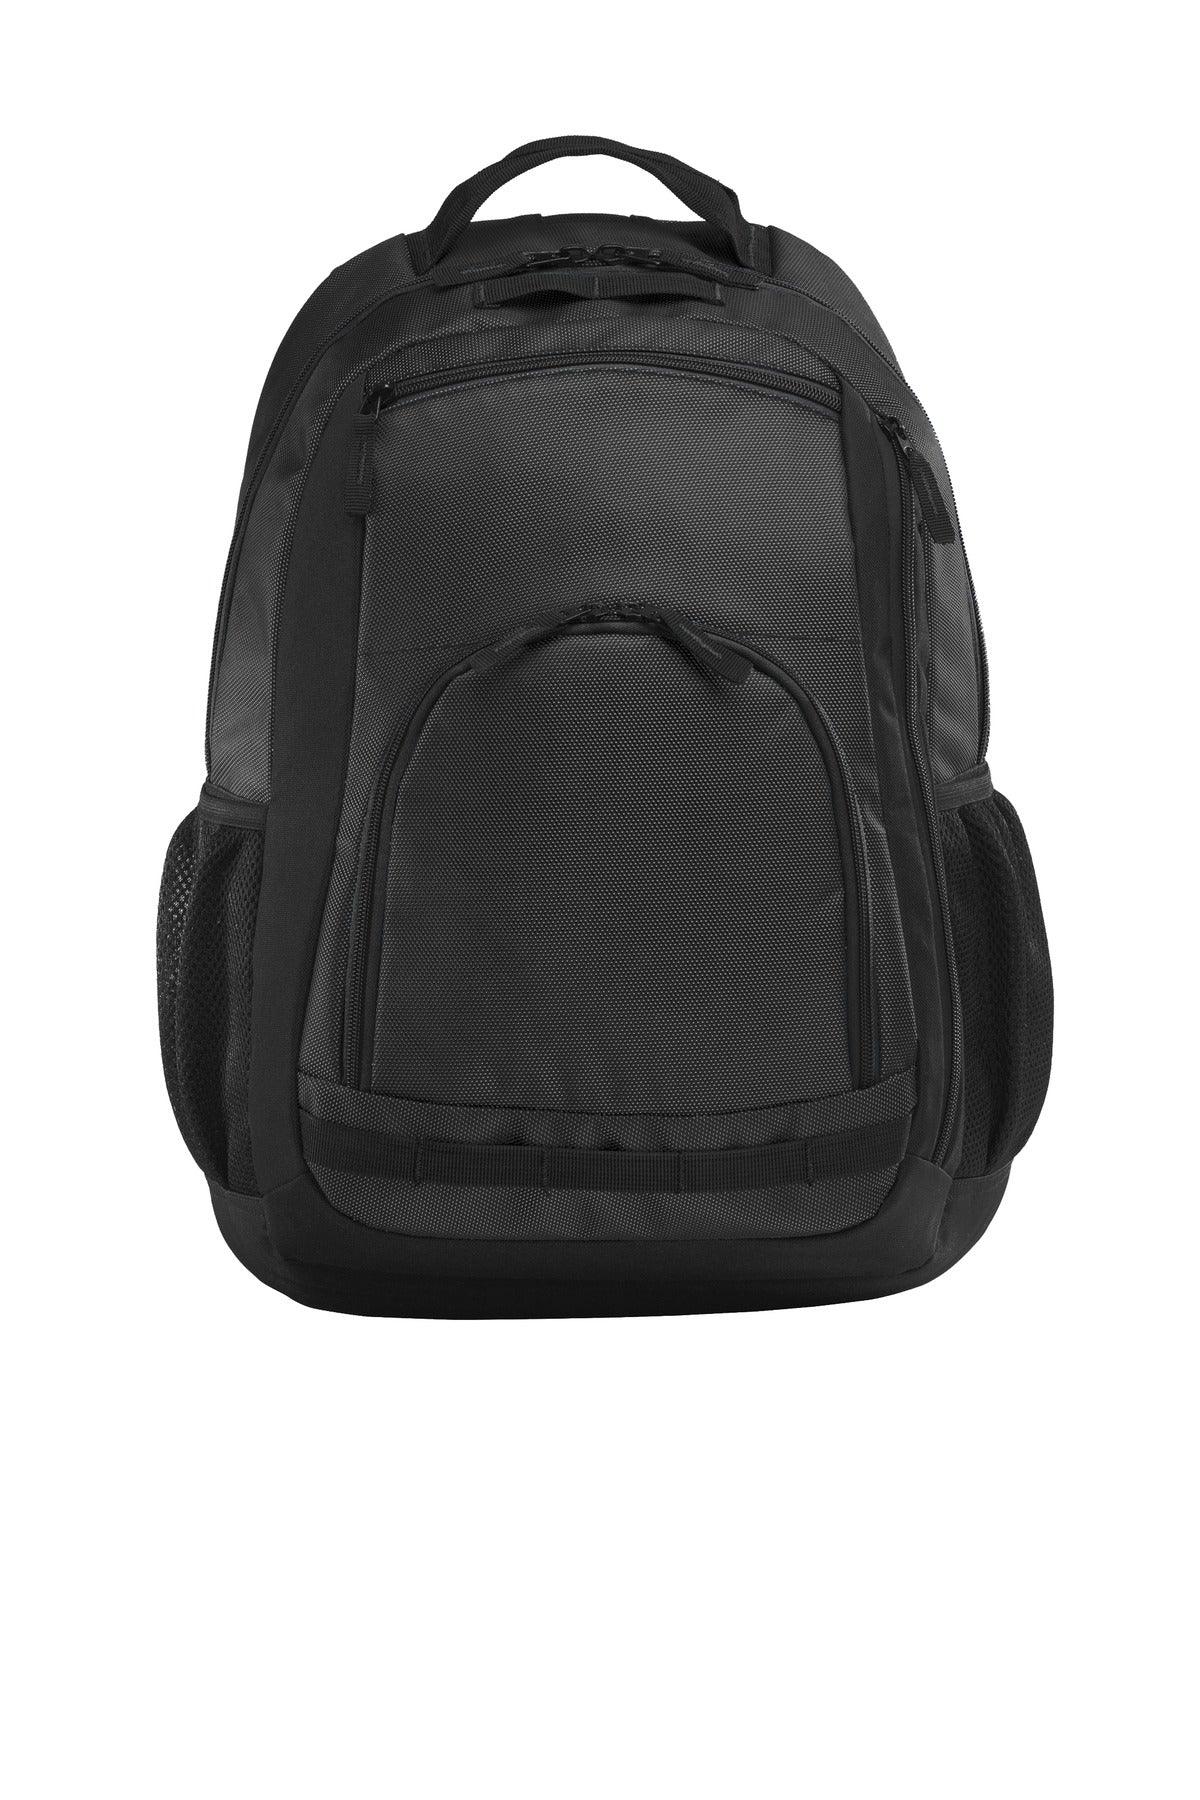 Port Authority Xtreme Backpack. BG207 - Dresses Max